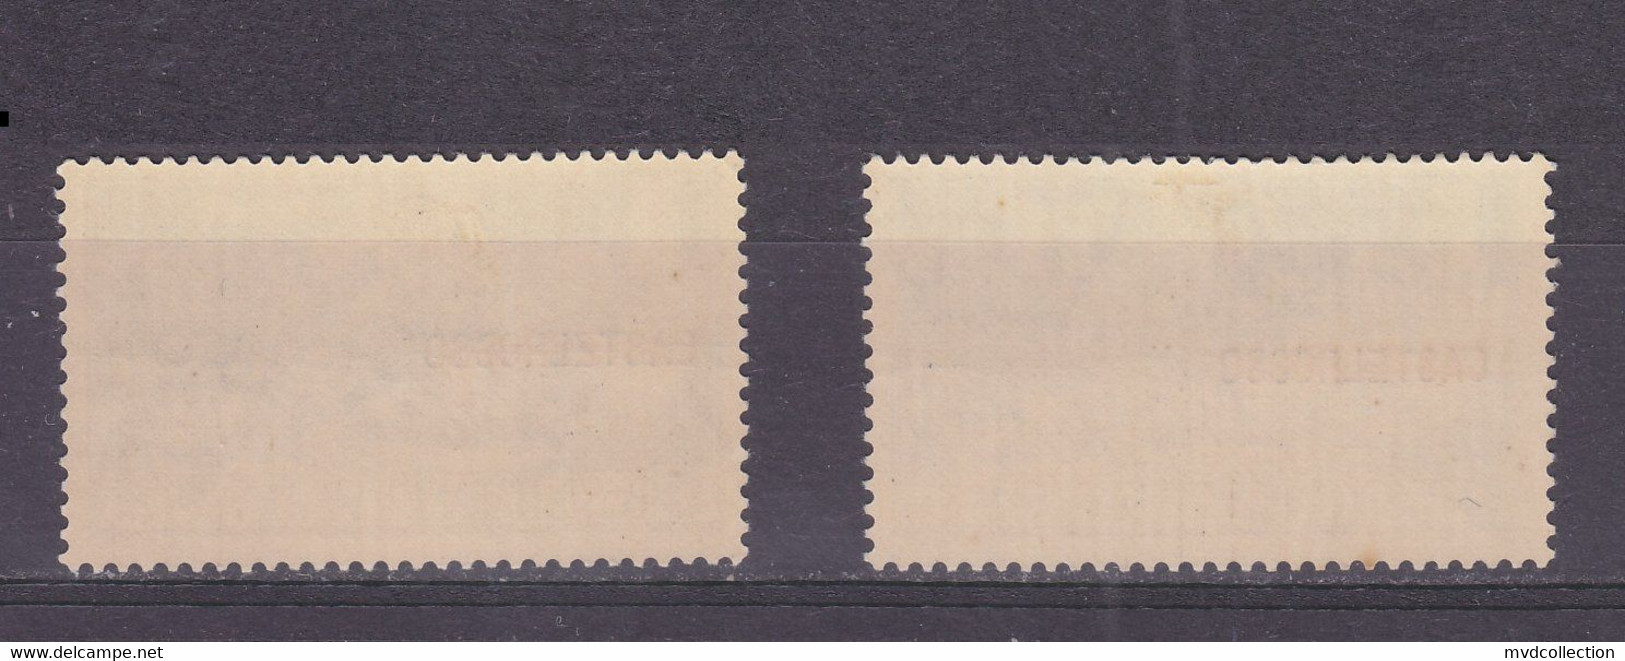 ITALY Lot CENTENARIO FERRUCCI Stamps Overprinted CASTEL ROSSO 1930 VF MH Original Gum - Castelrosso